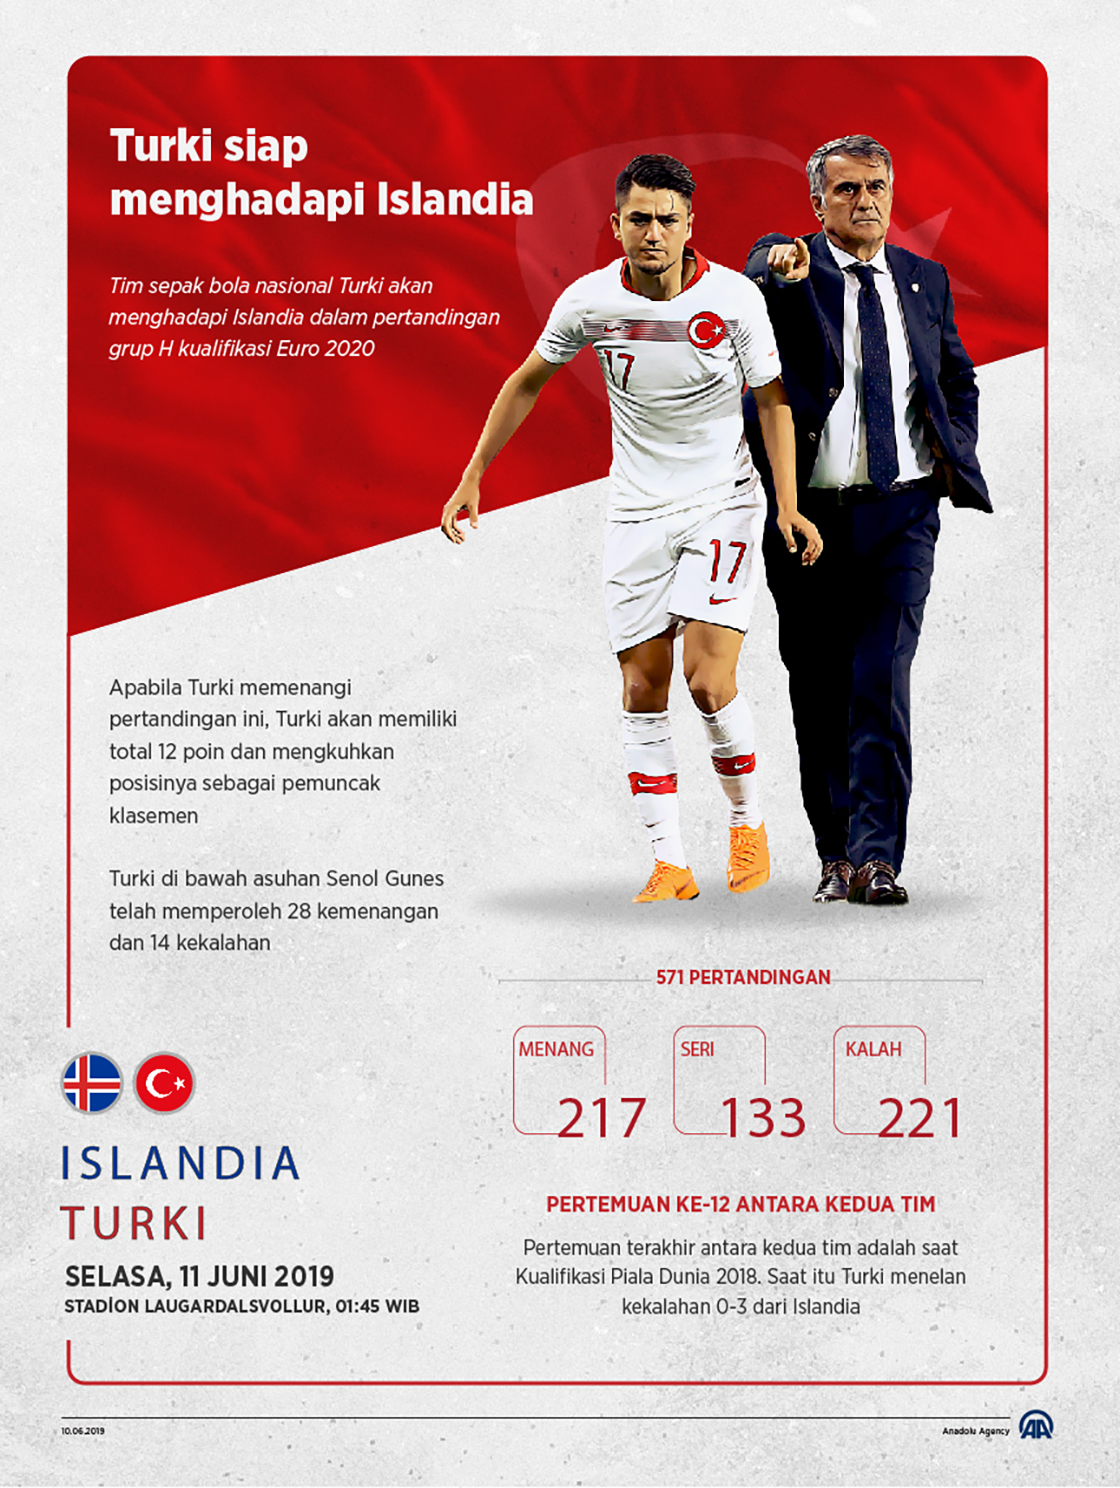 Turki siap menghadapi Islandia 